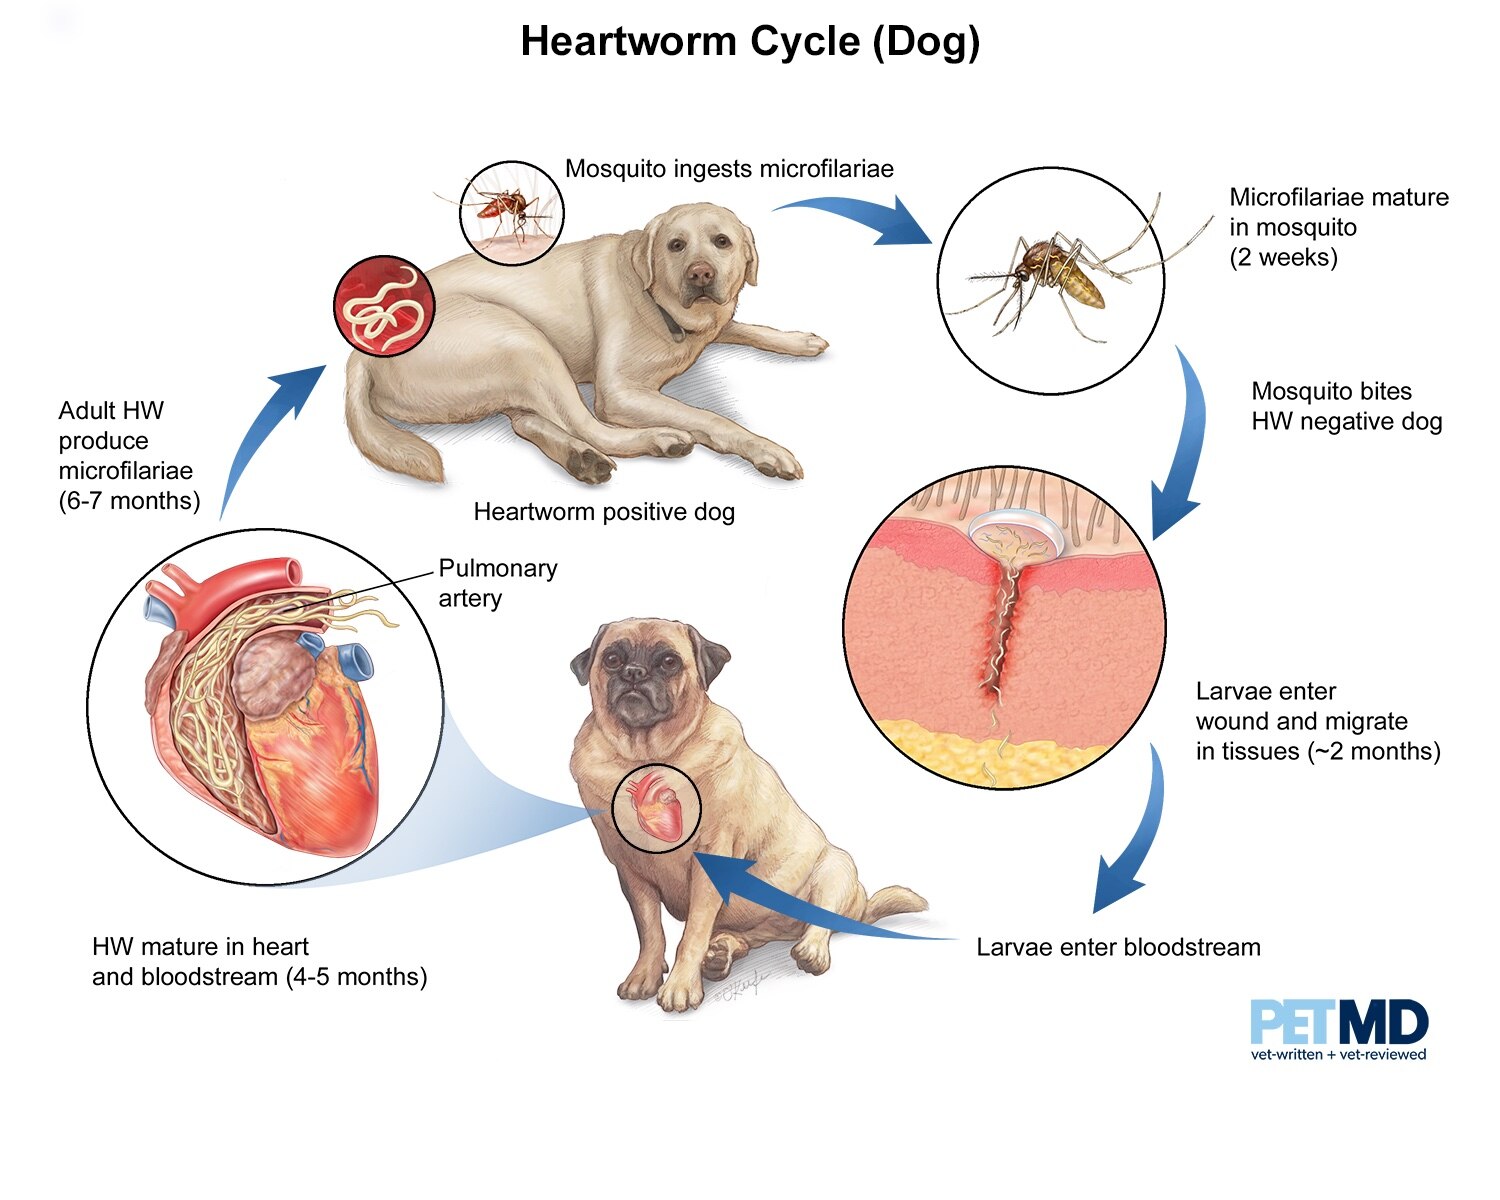 Heartworm cycle (dog)